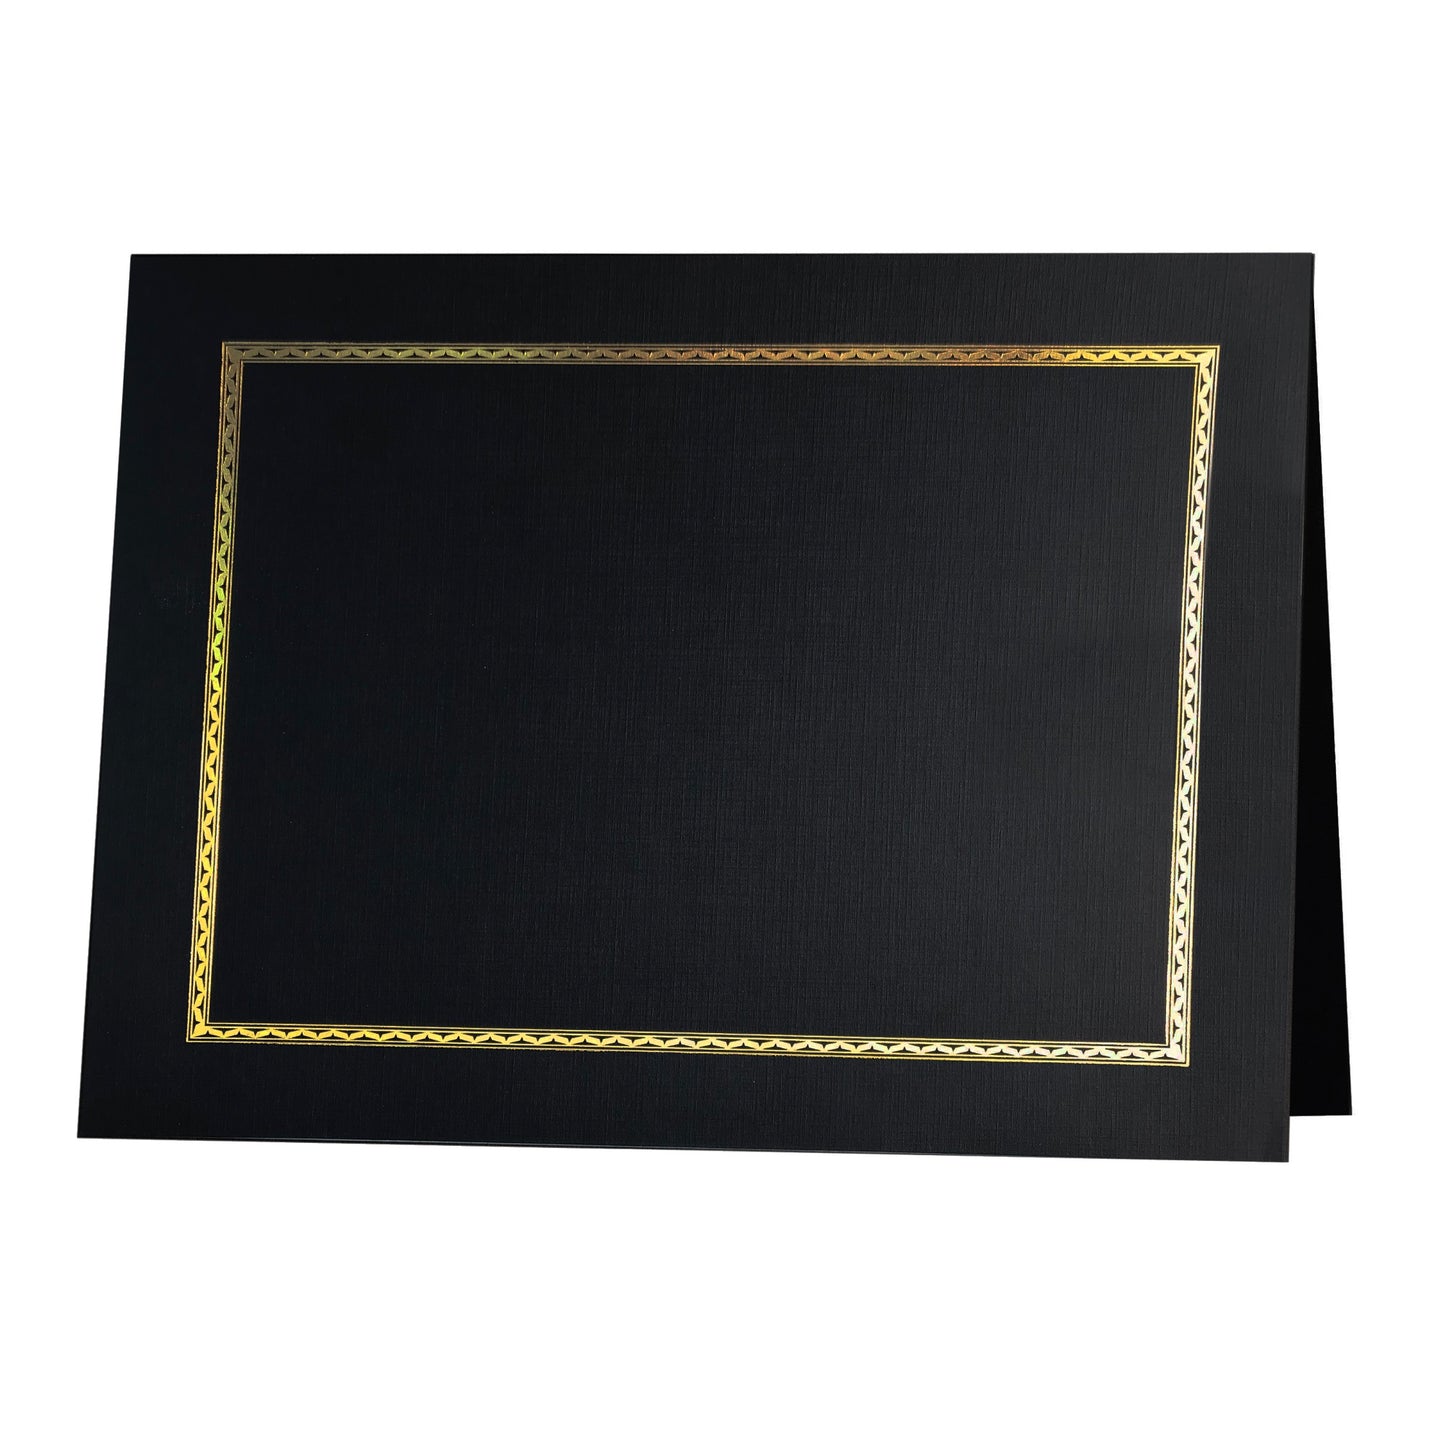 St. James® Elite™ Aztec Certificate Holders, Black Linen with Gold Foil, Pack of 25